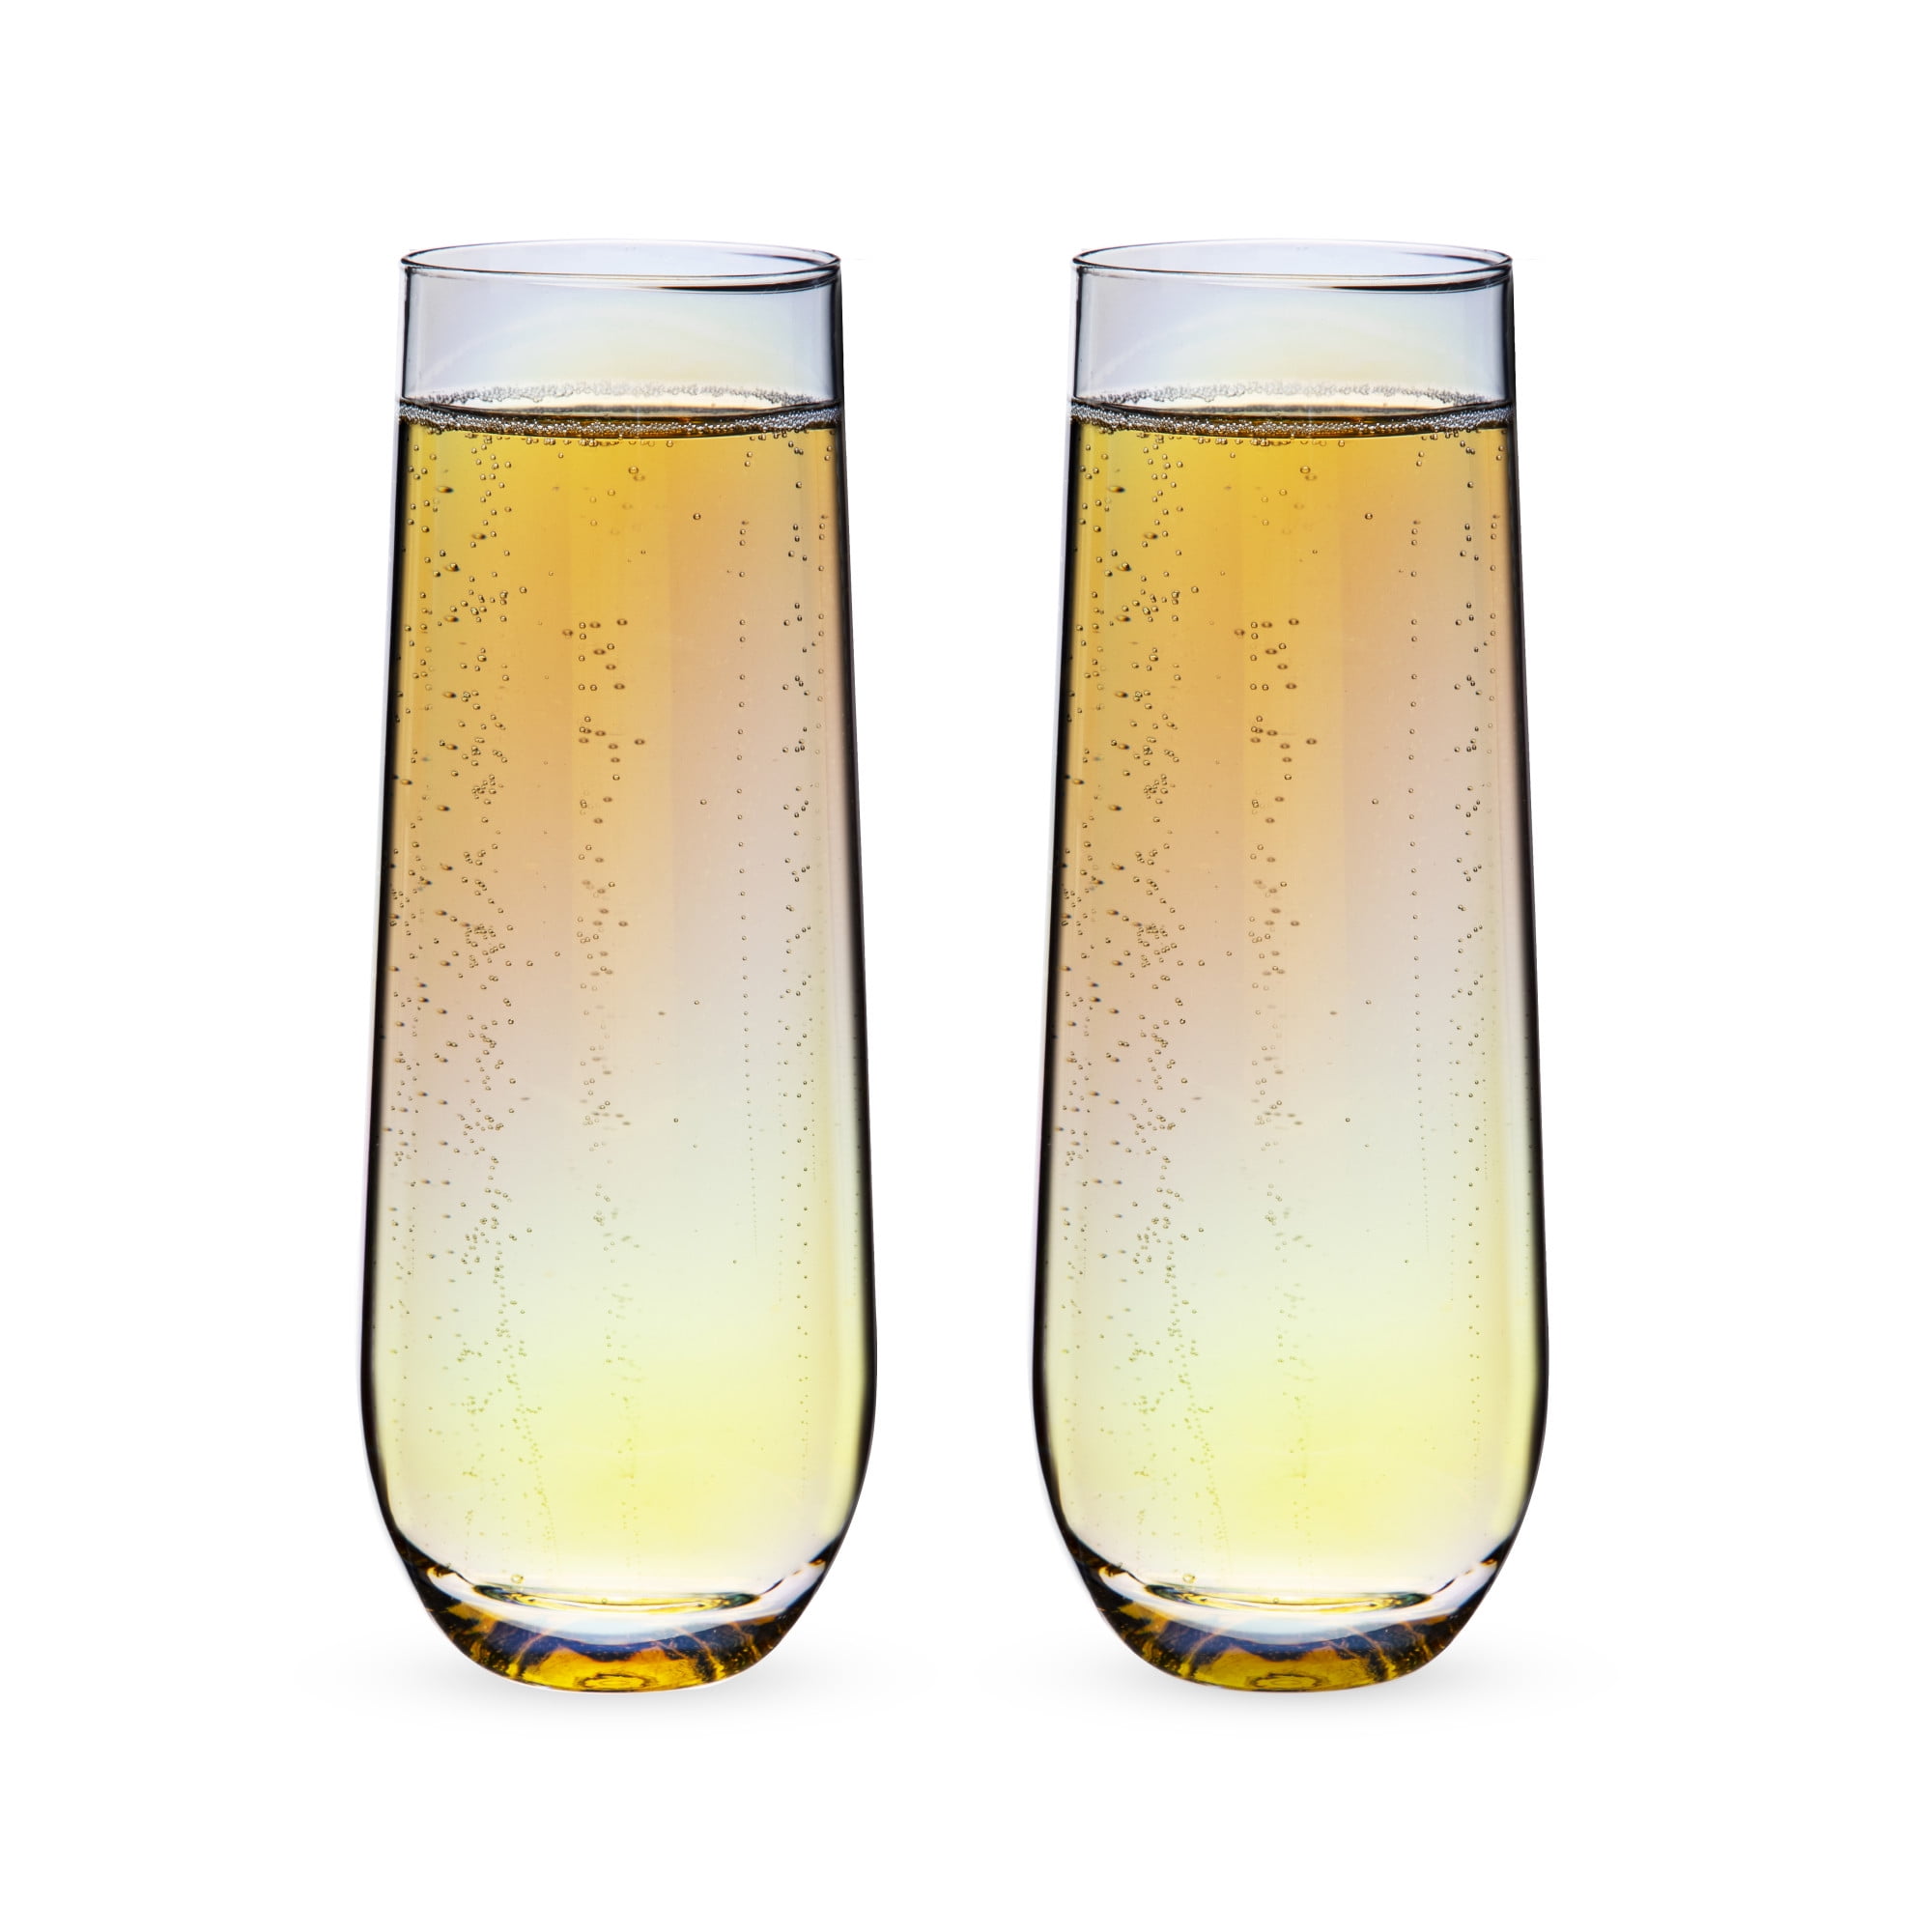 Twine Luster Stemless Wine Glasses, Set of 2, 20 Oz. Rainbow Finish  Tumblers, Decorative Barware, Multicolor Finish